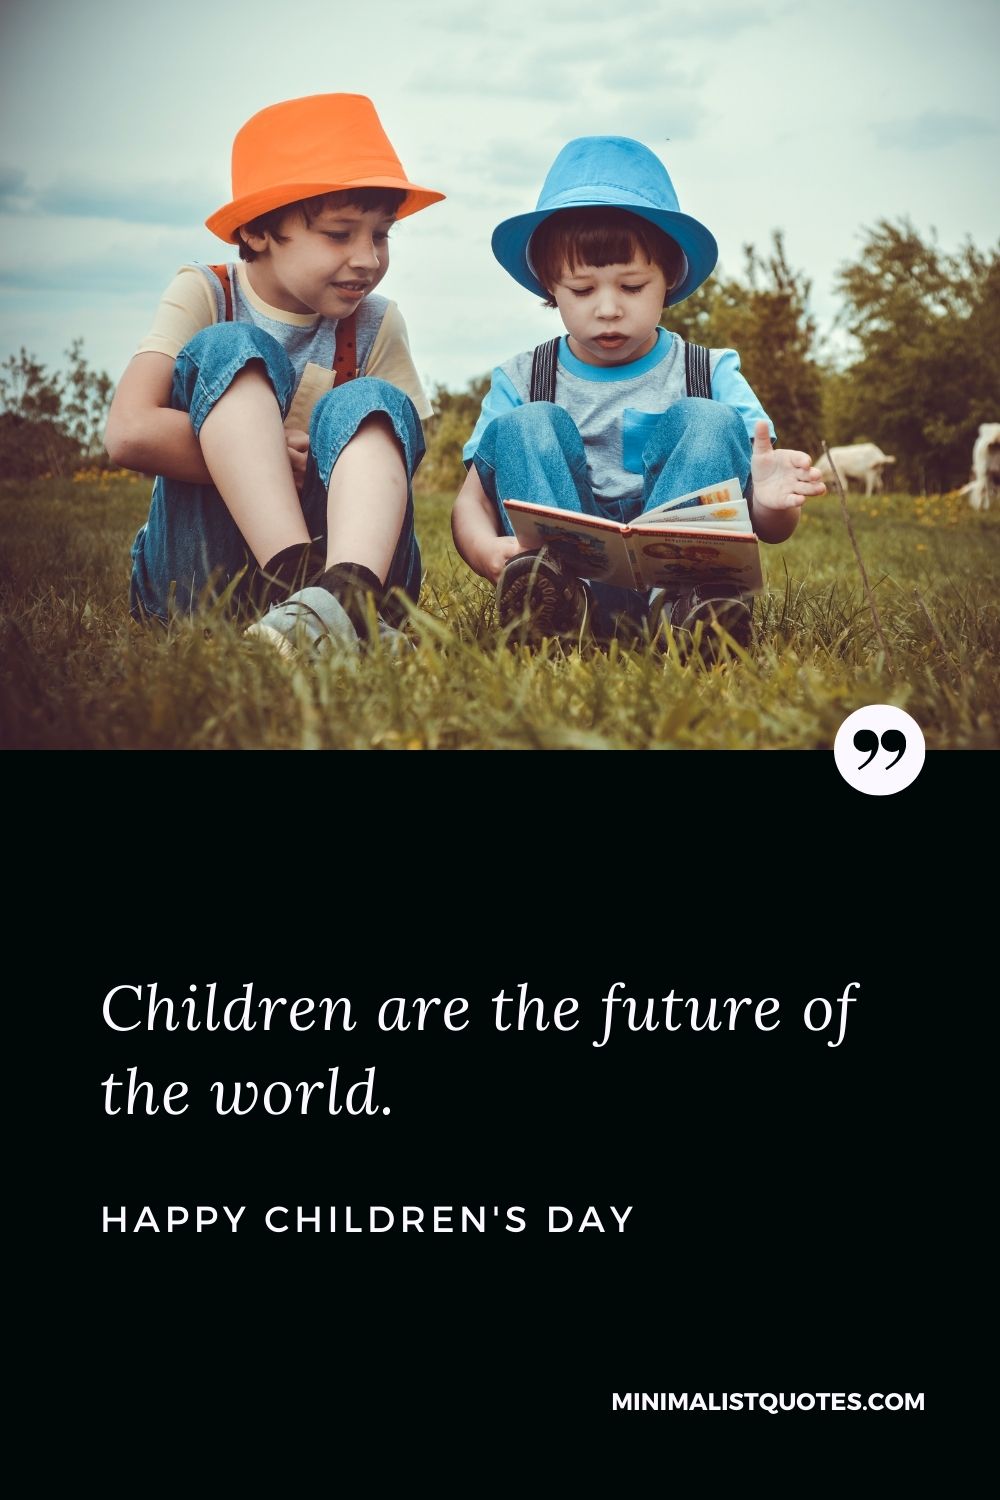 Children are the future of the world. Happy Children's Day!